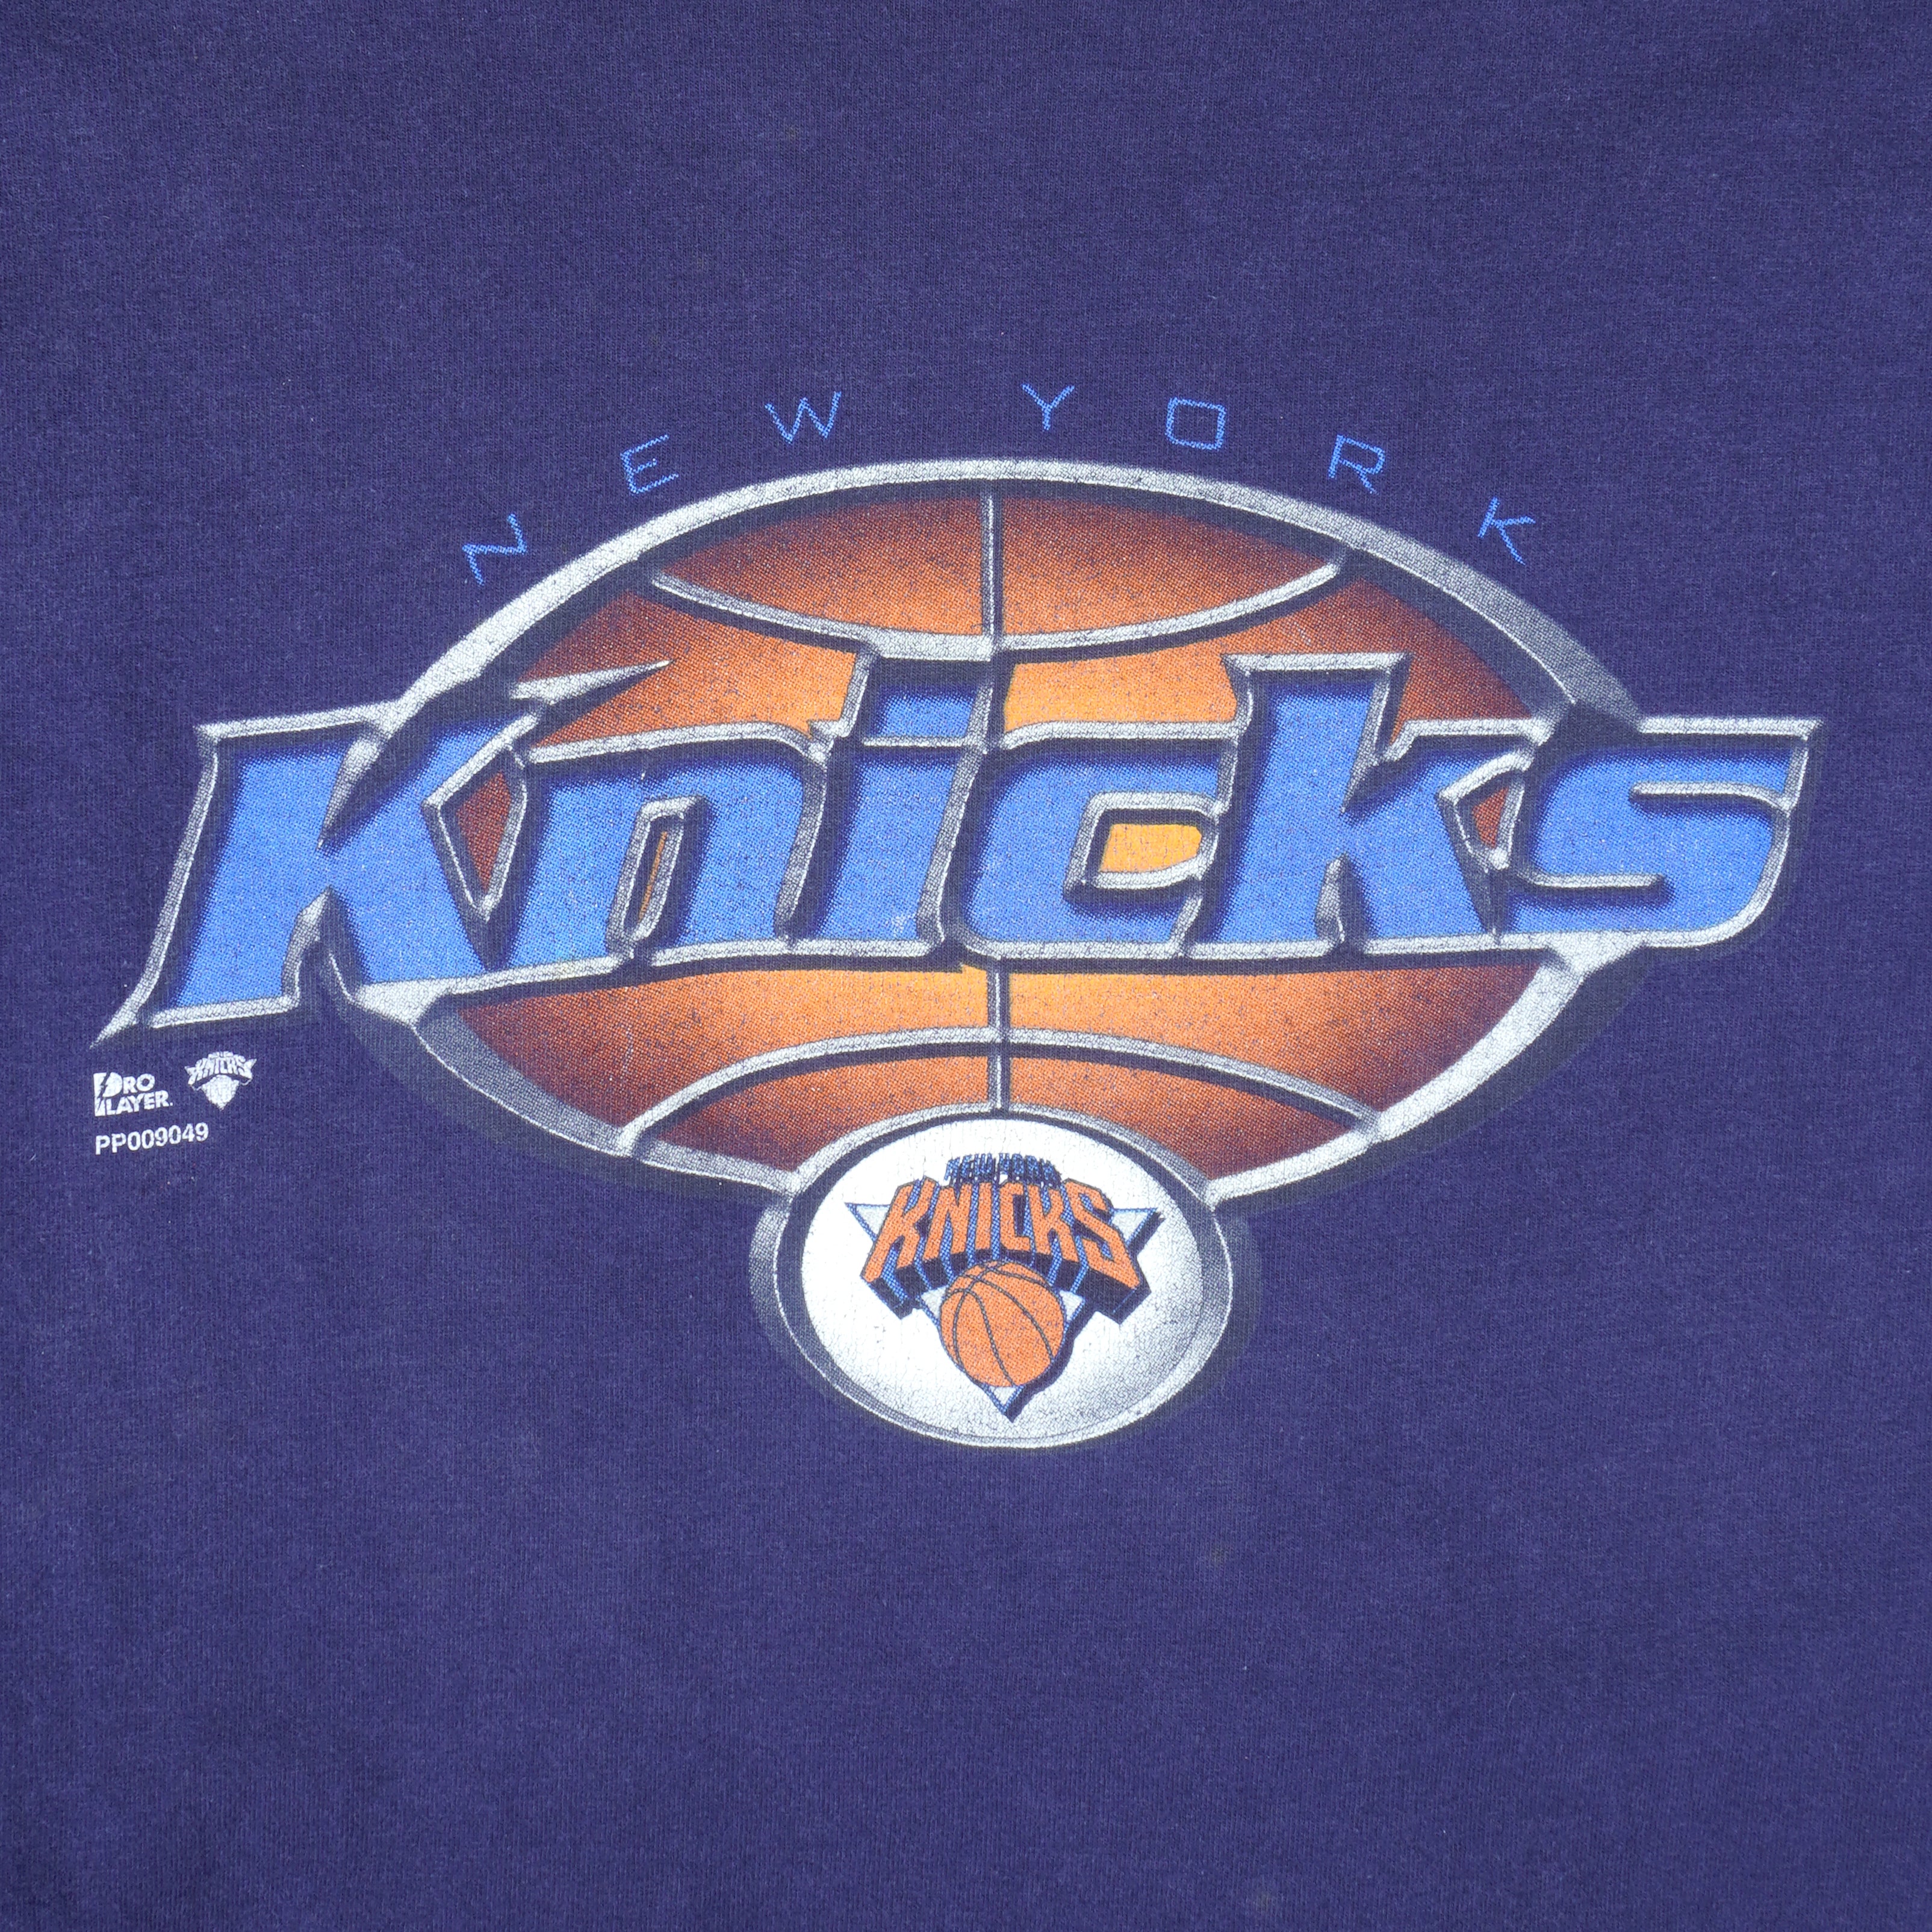 New York Knicks Apparel, Clothing & Gear